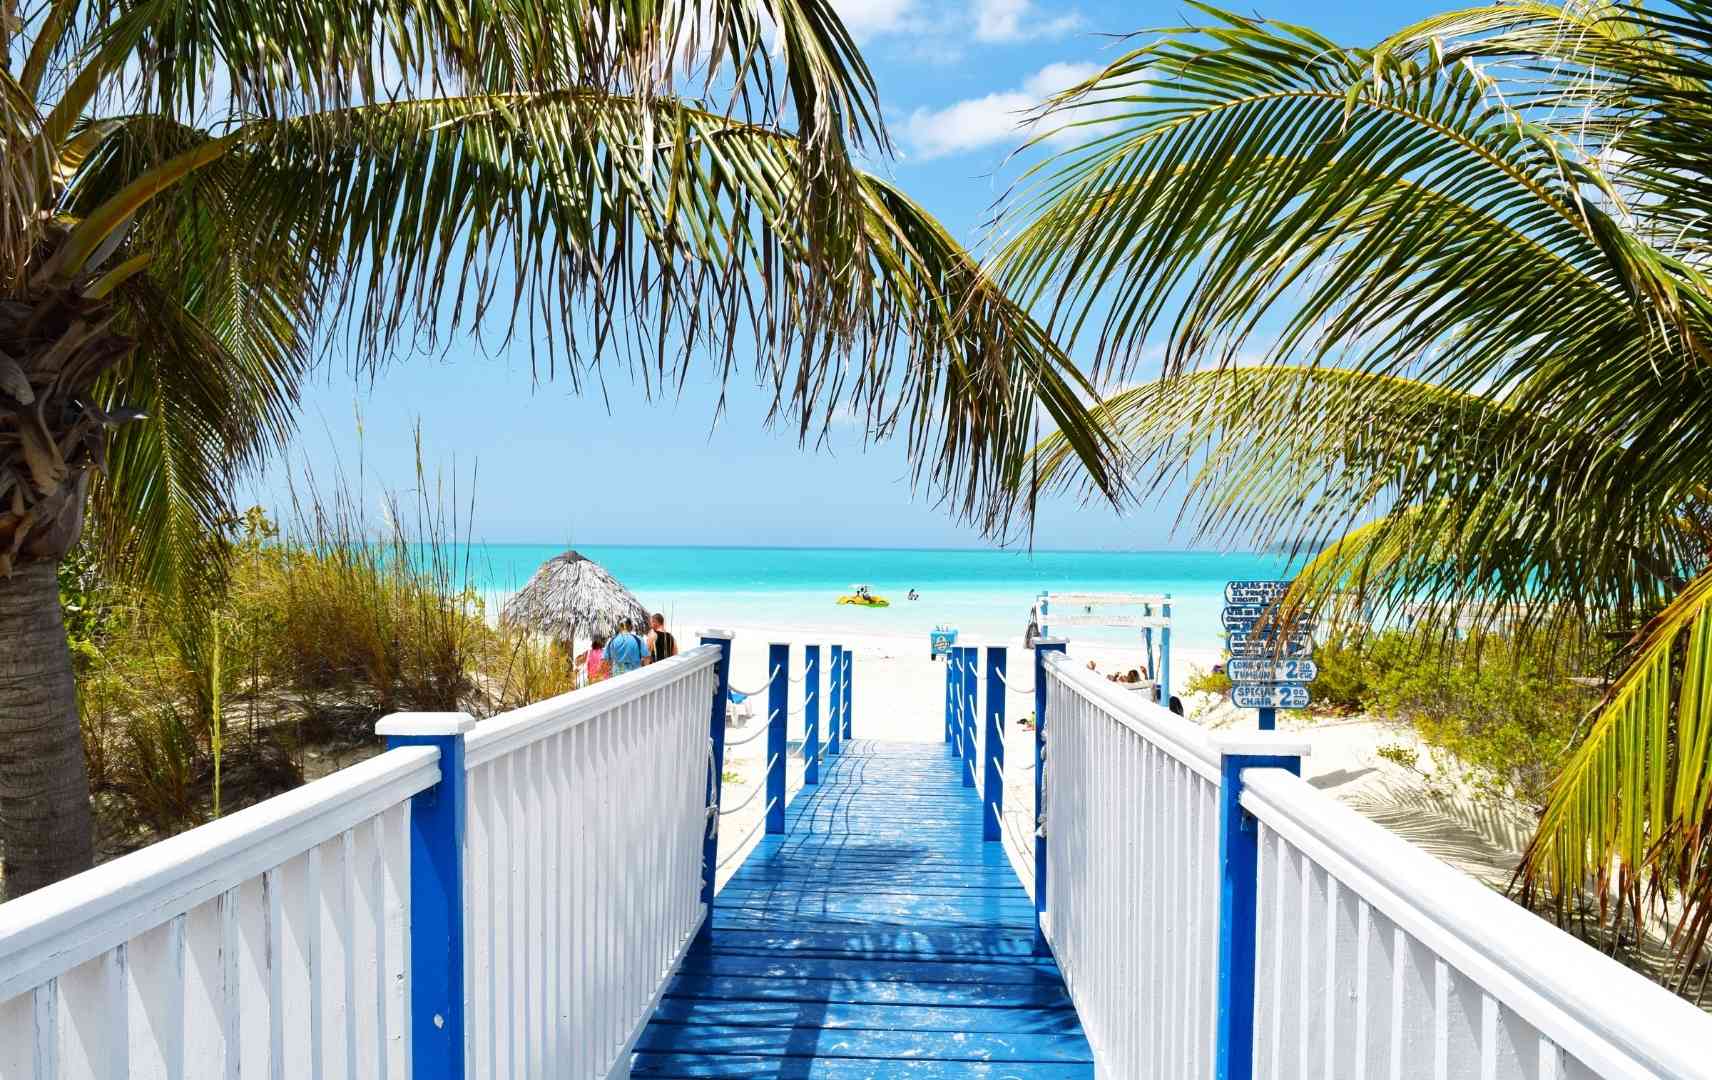 Steg an den Strand in der Karibik